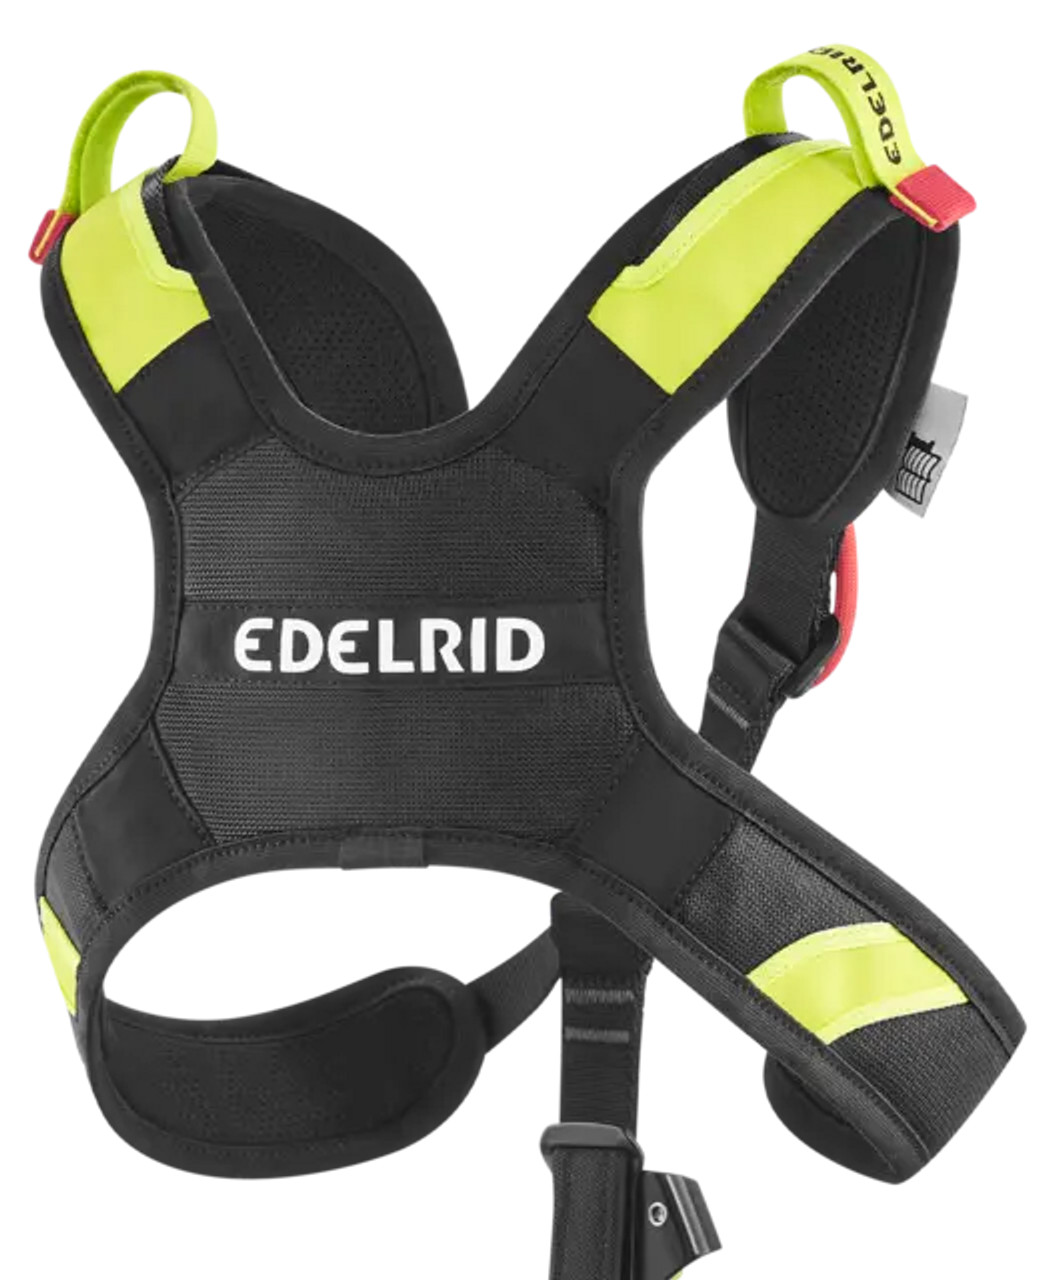 Edelrid VECTOR X Full Body Harness